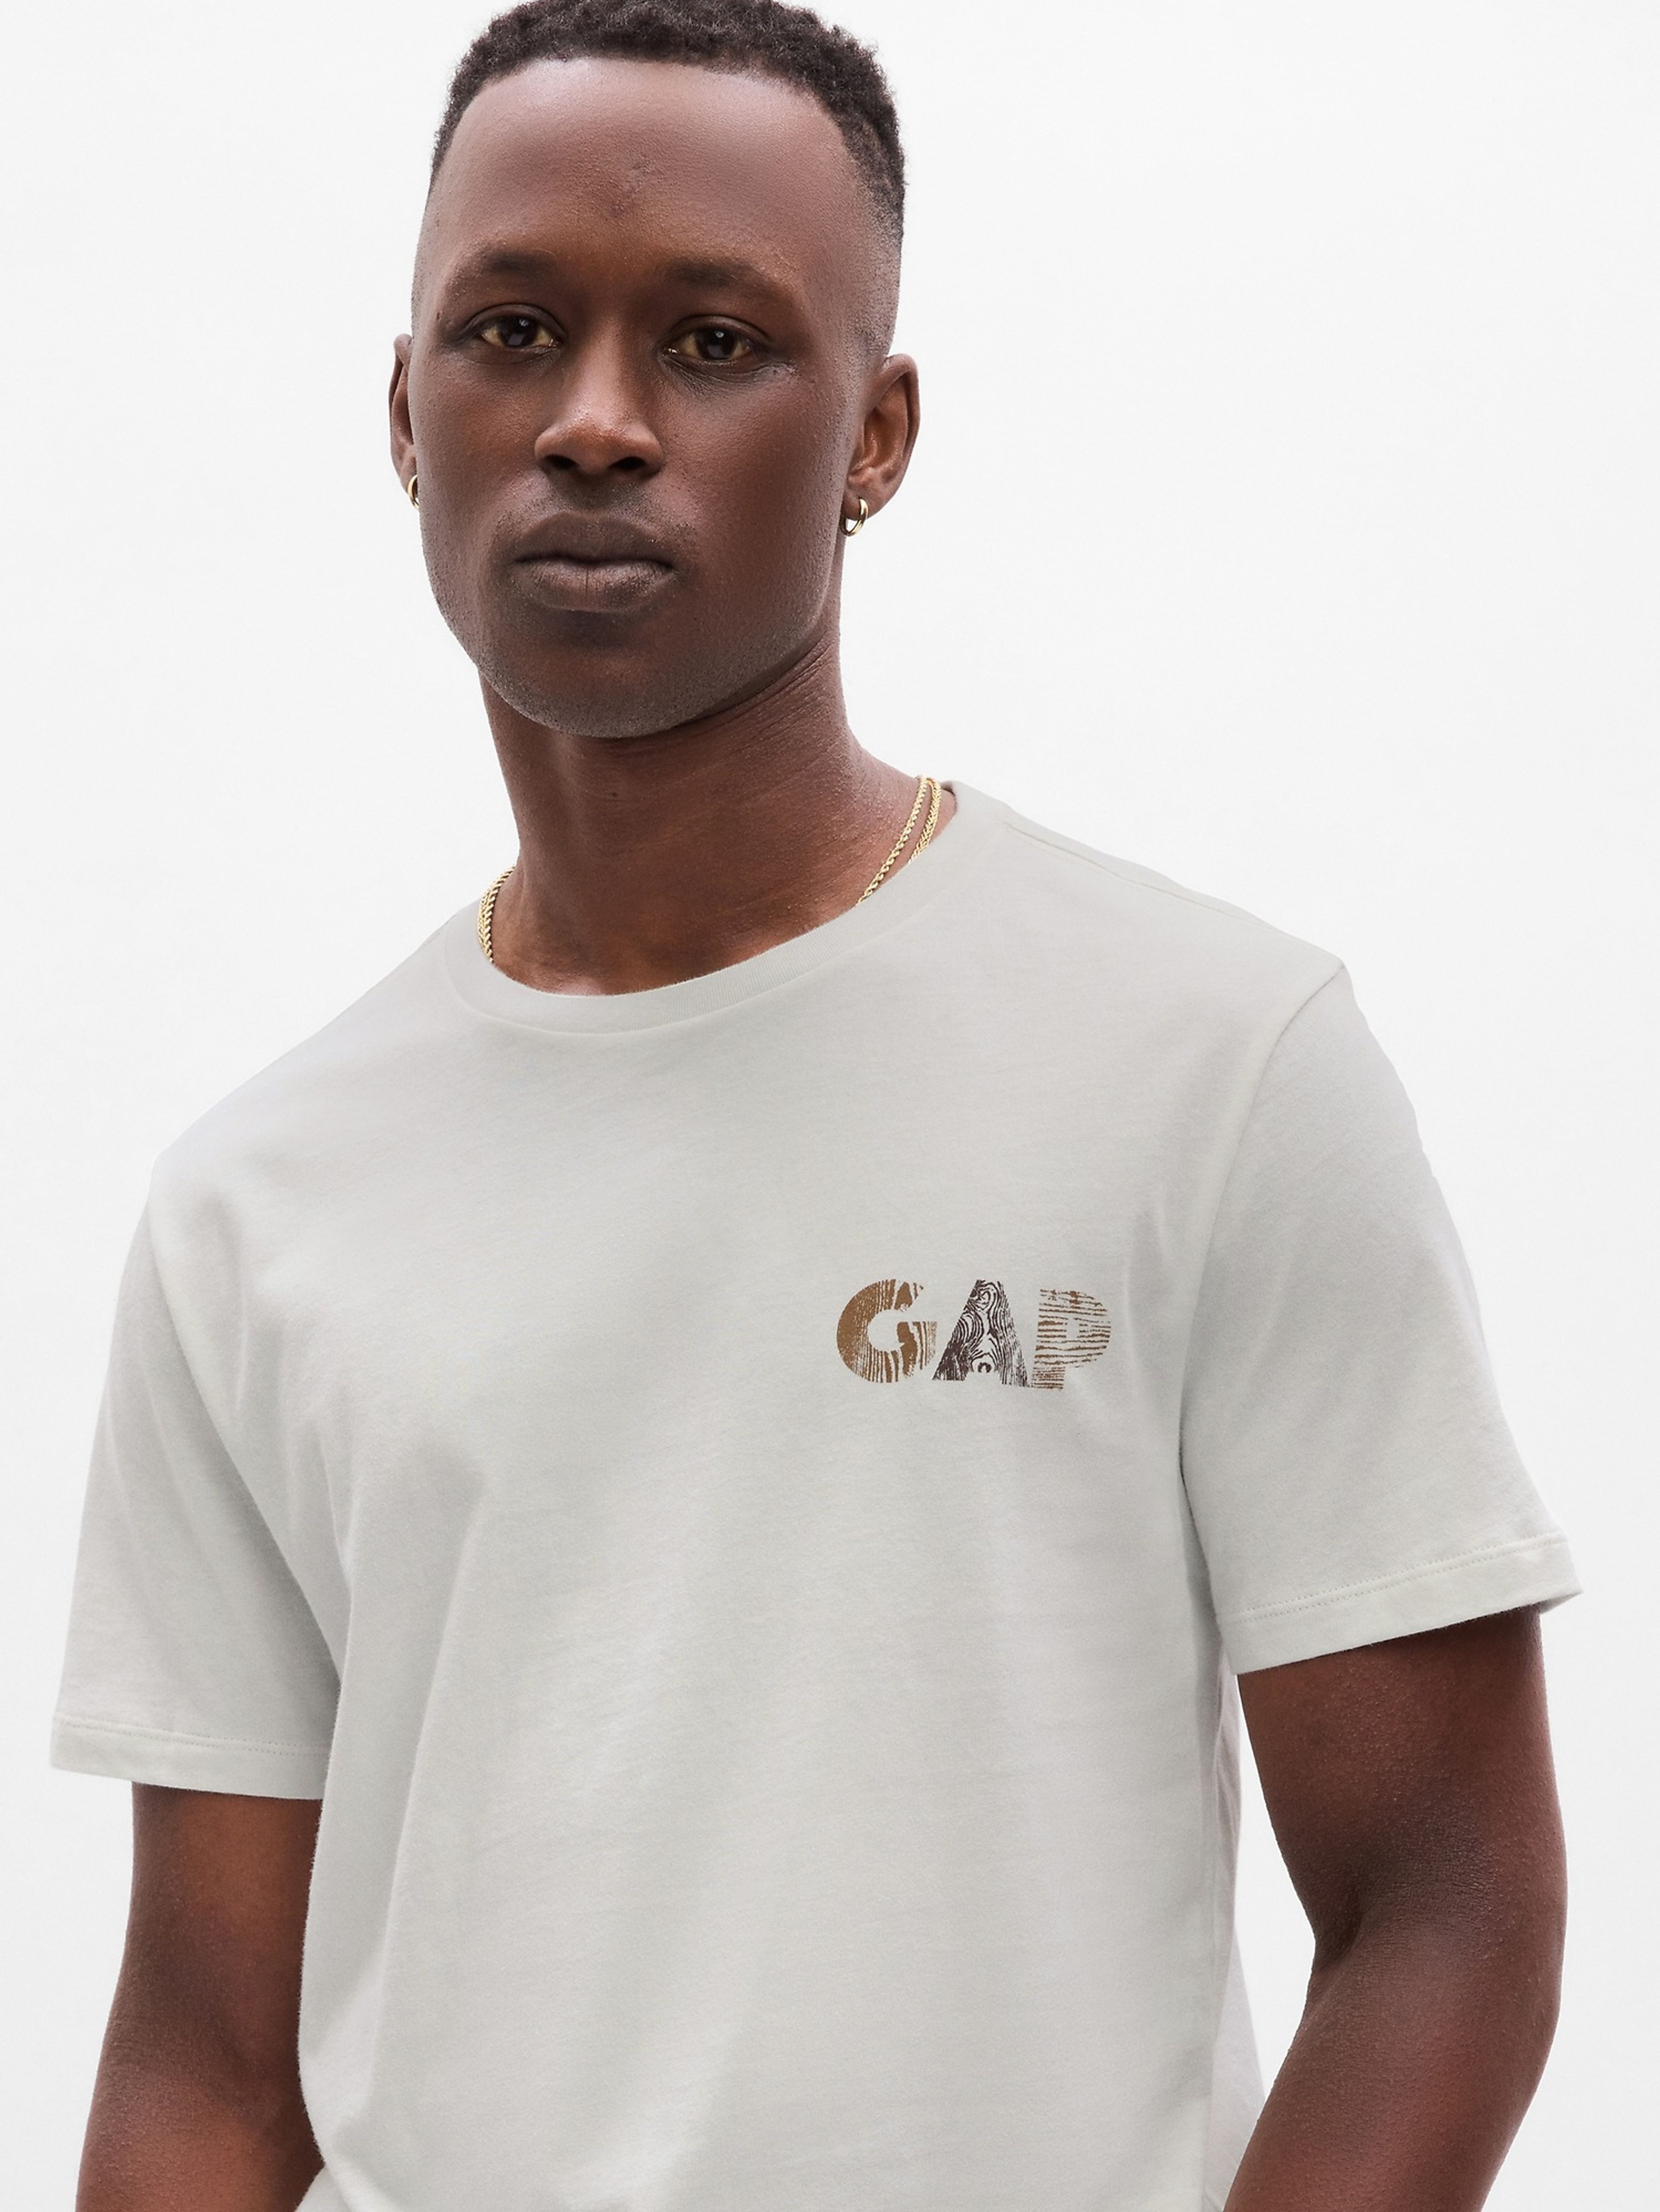 Tričko s logem GAP